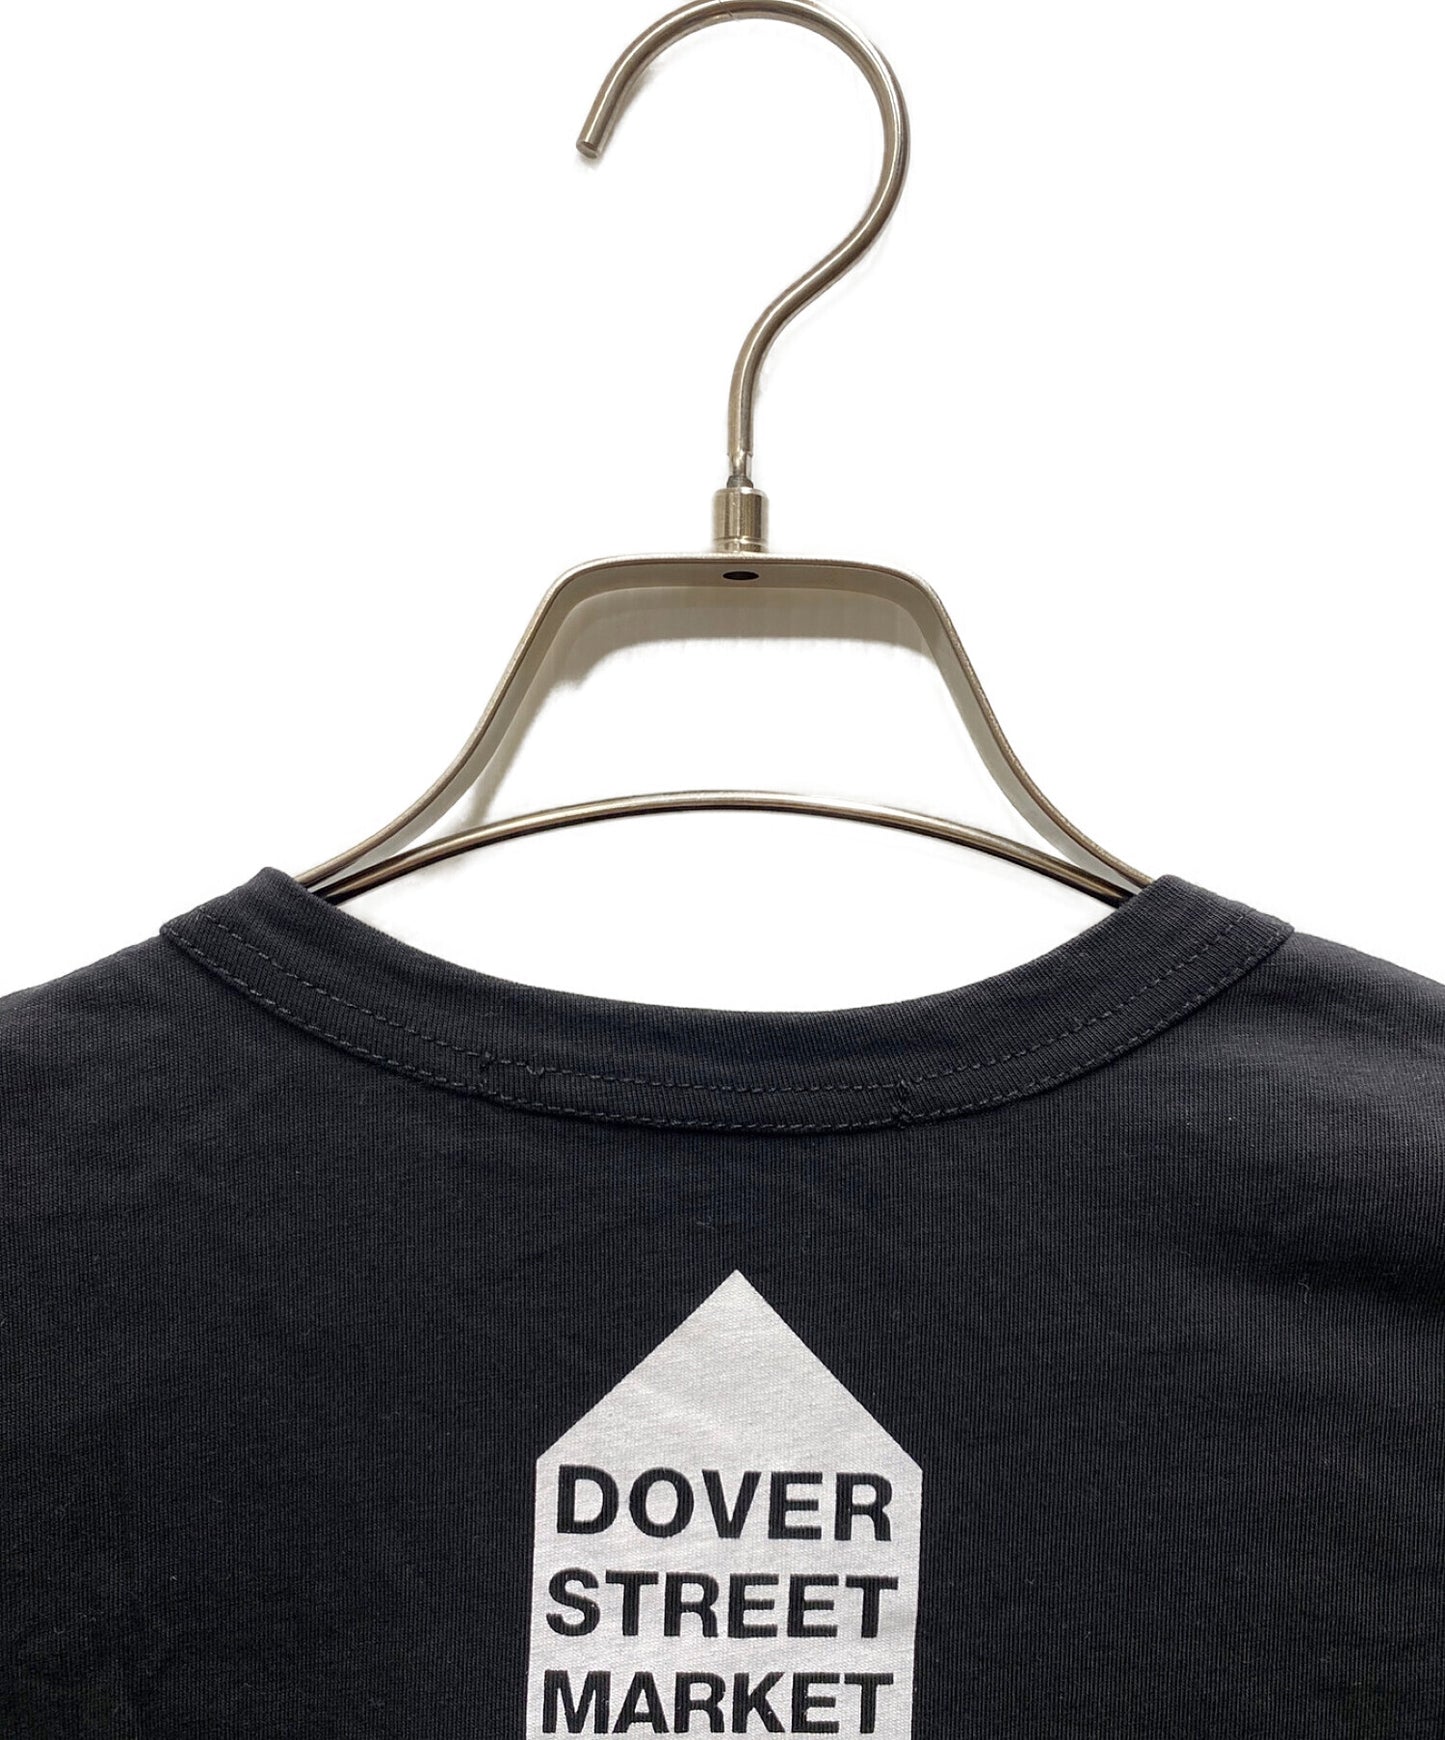 Comme des Garcons Dover Street Market Limited Collaboration 티셔츠 ZI-T002-001